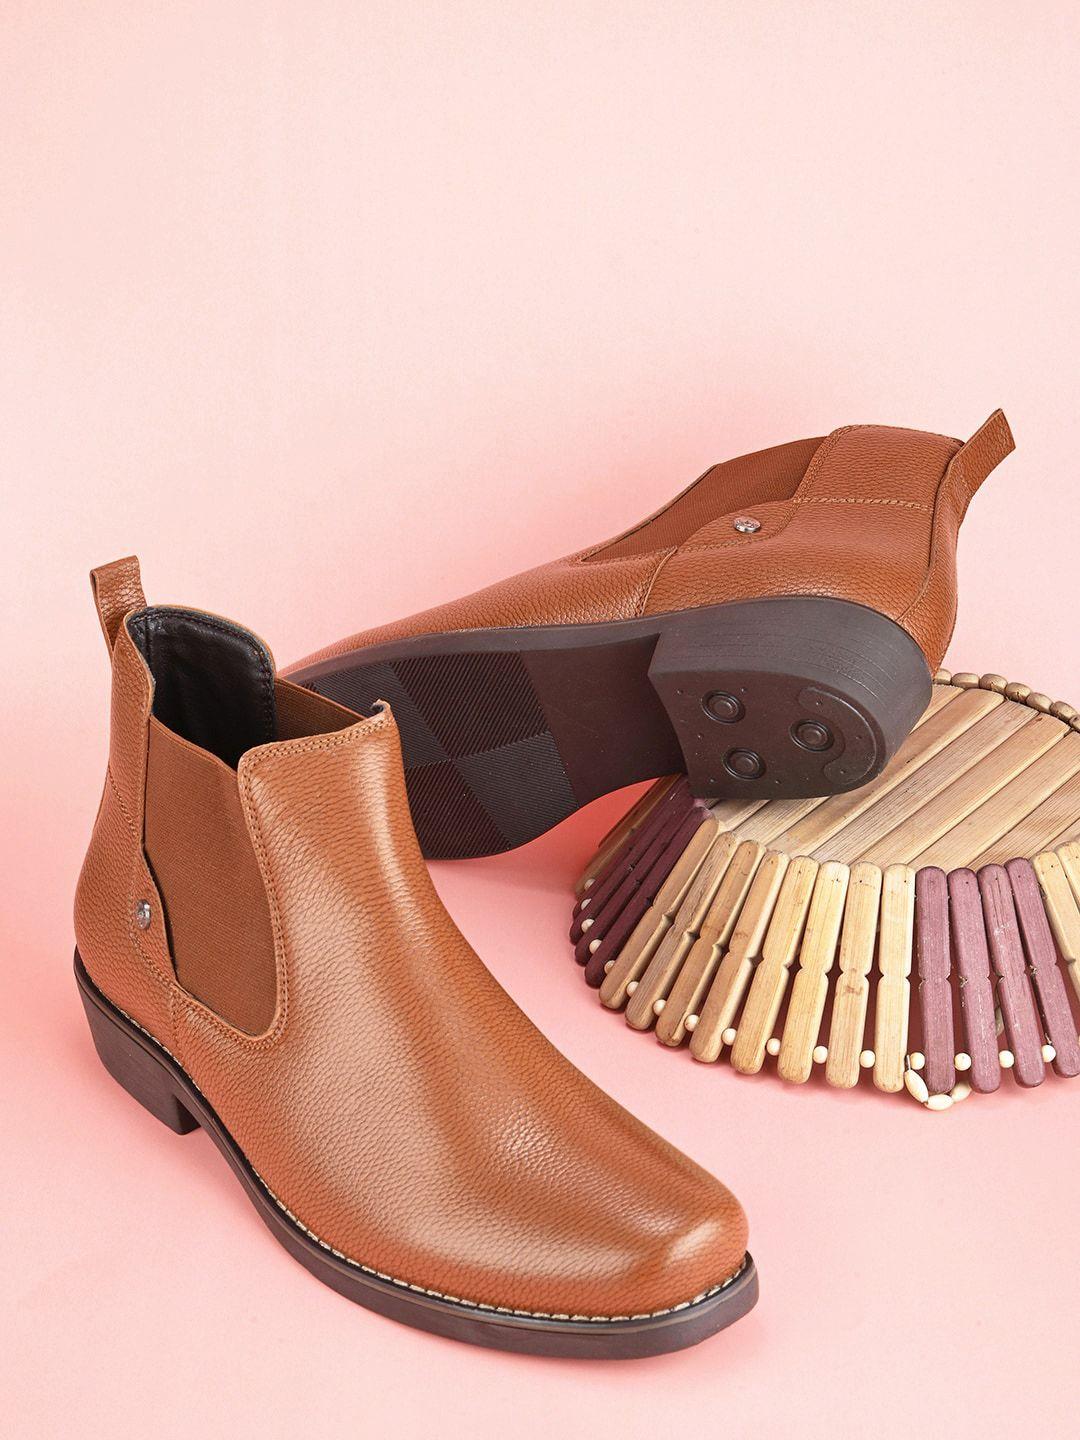 the roadster lifestyle co. men tan brown mid top block-heel chelsea boots